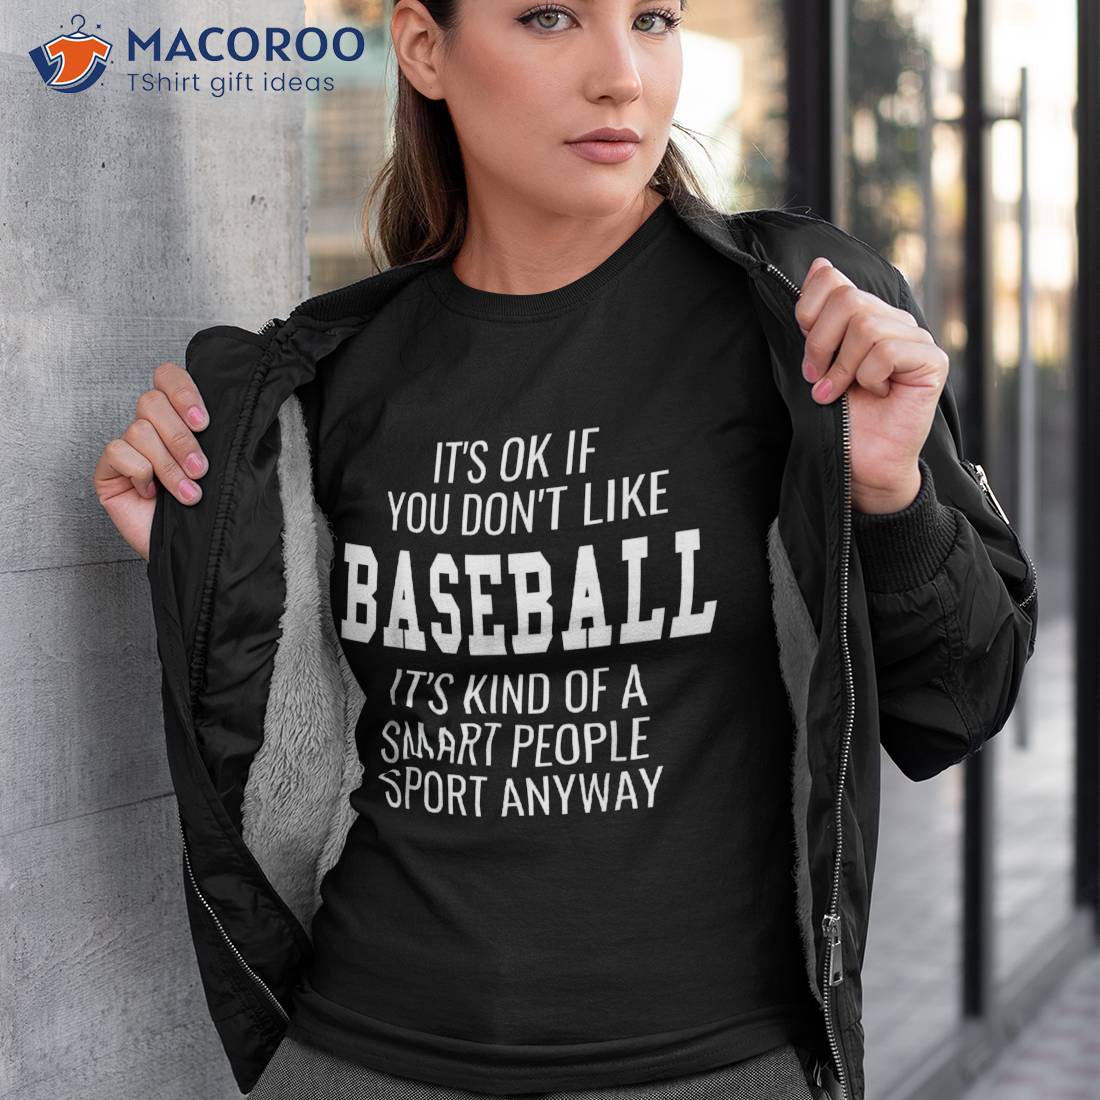 funny baseball t shirts